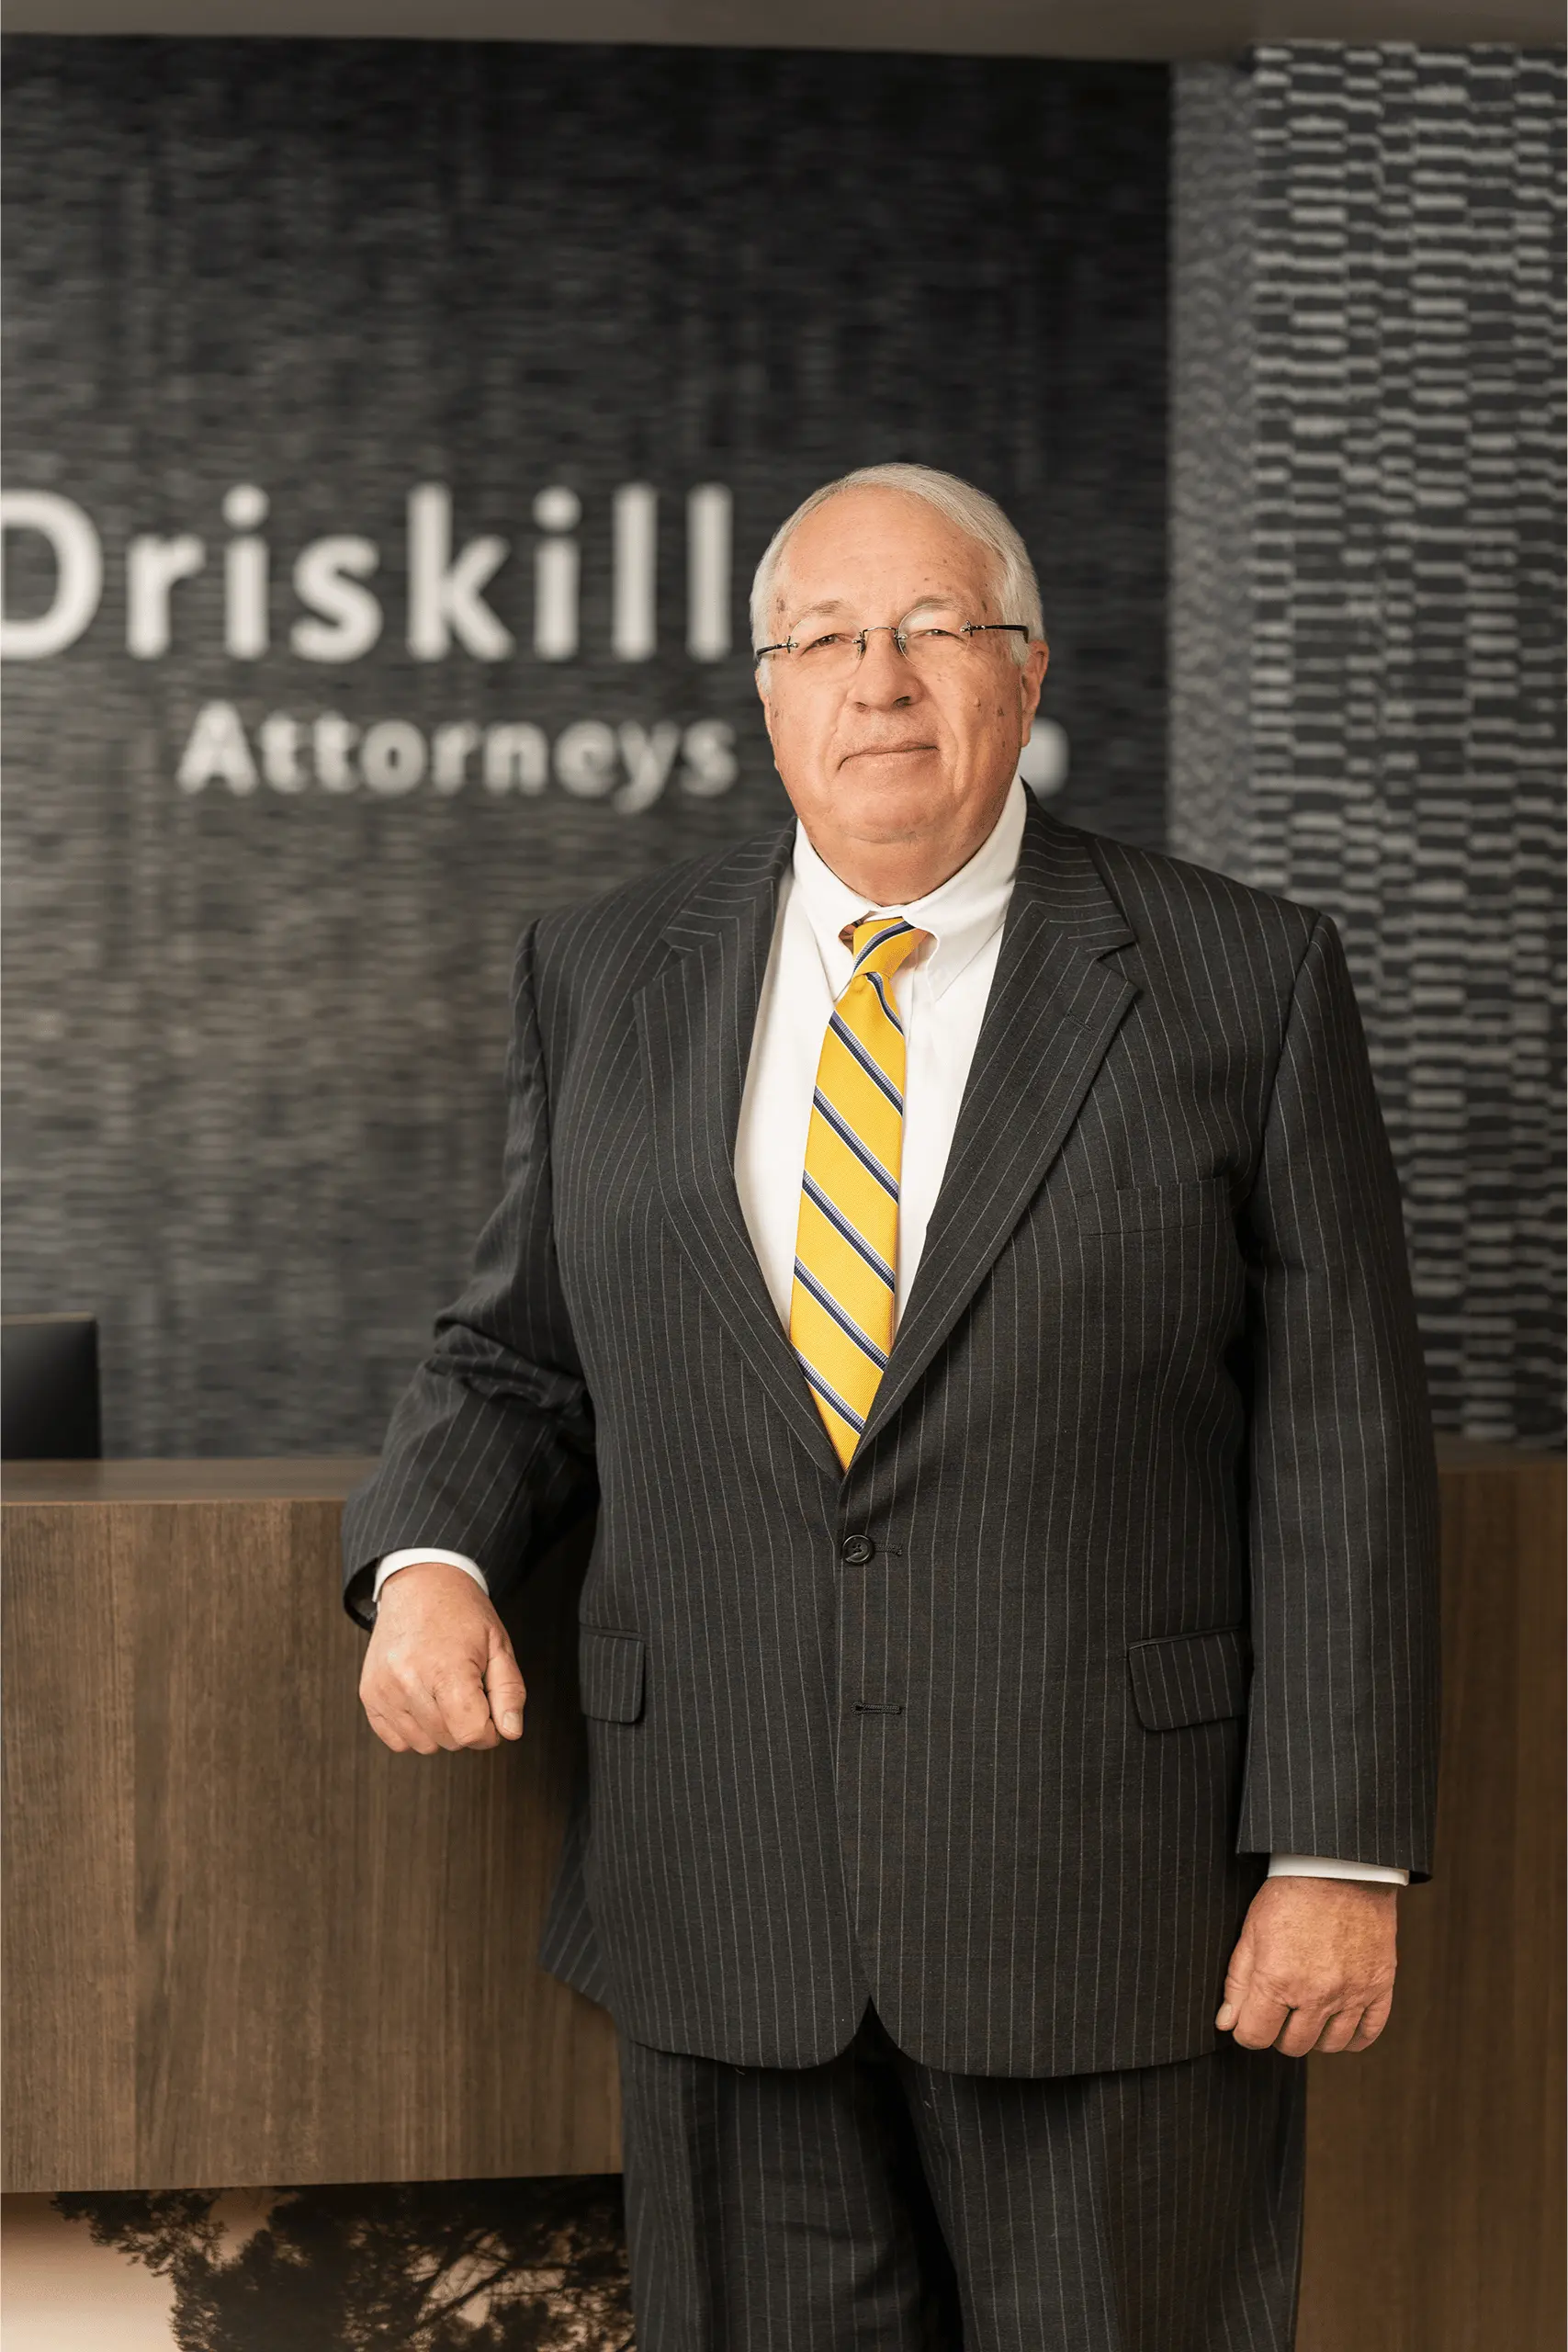 Roger M. Driskill